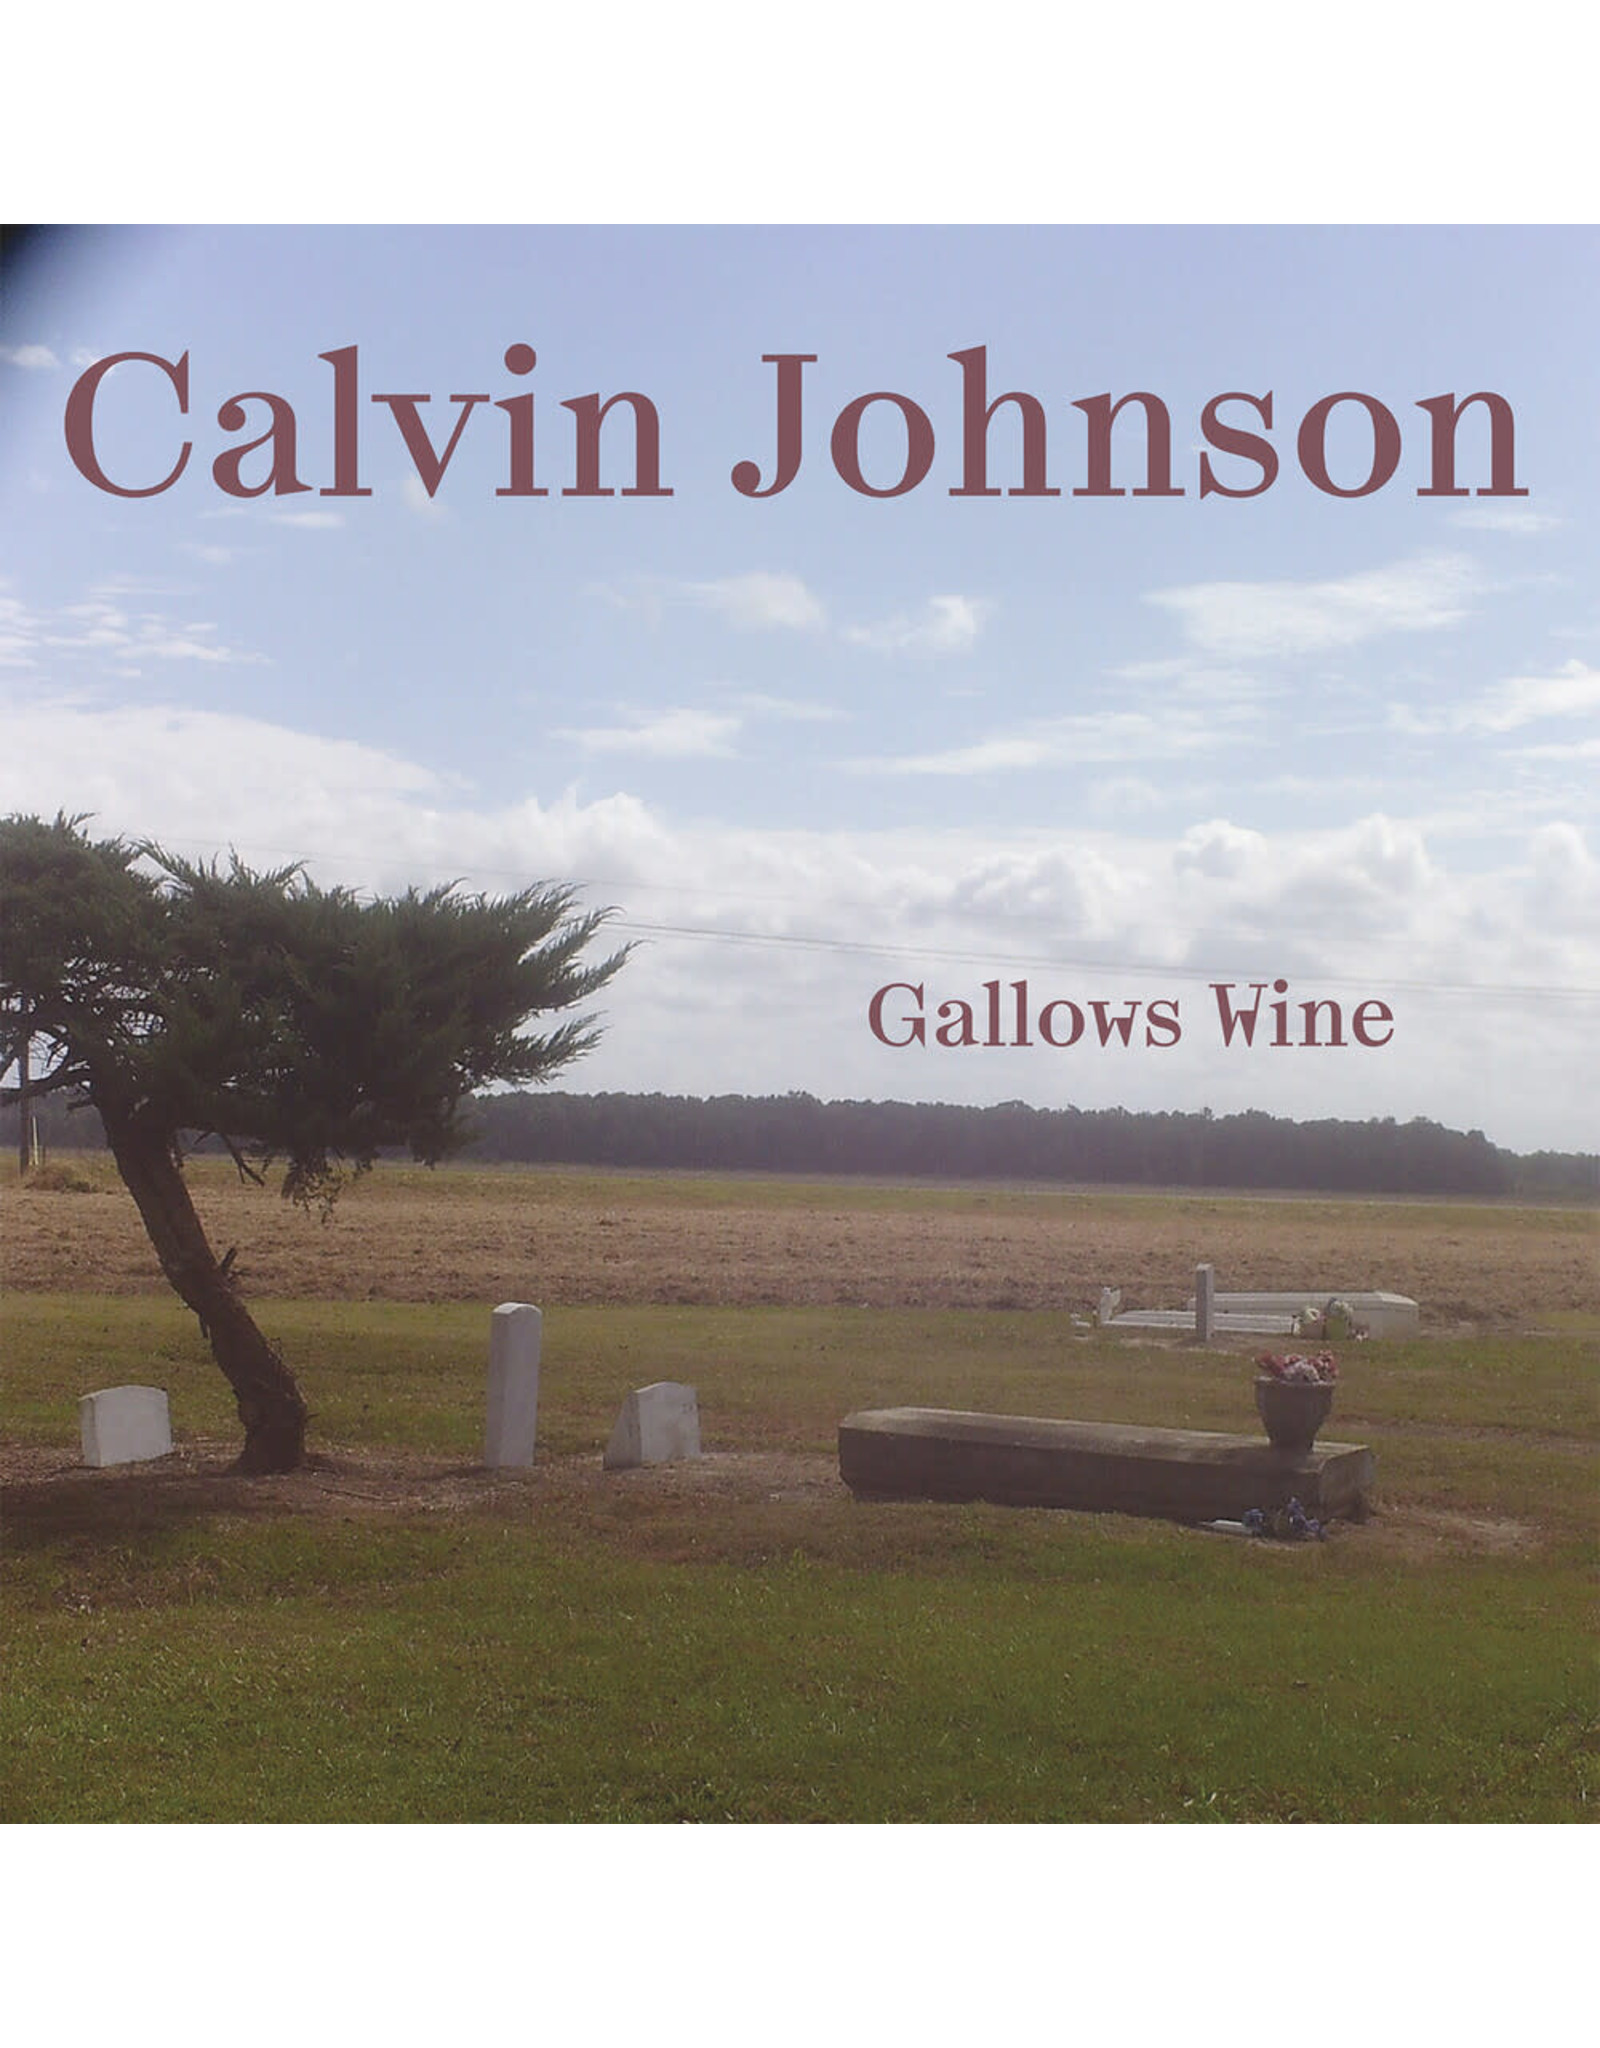 Johnson, Calvin - Gallows Wine LP